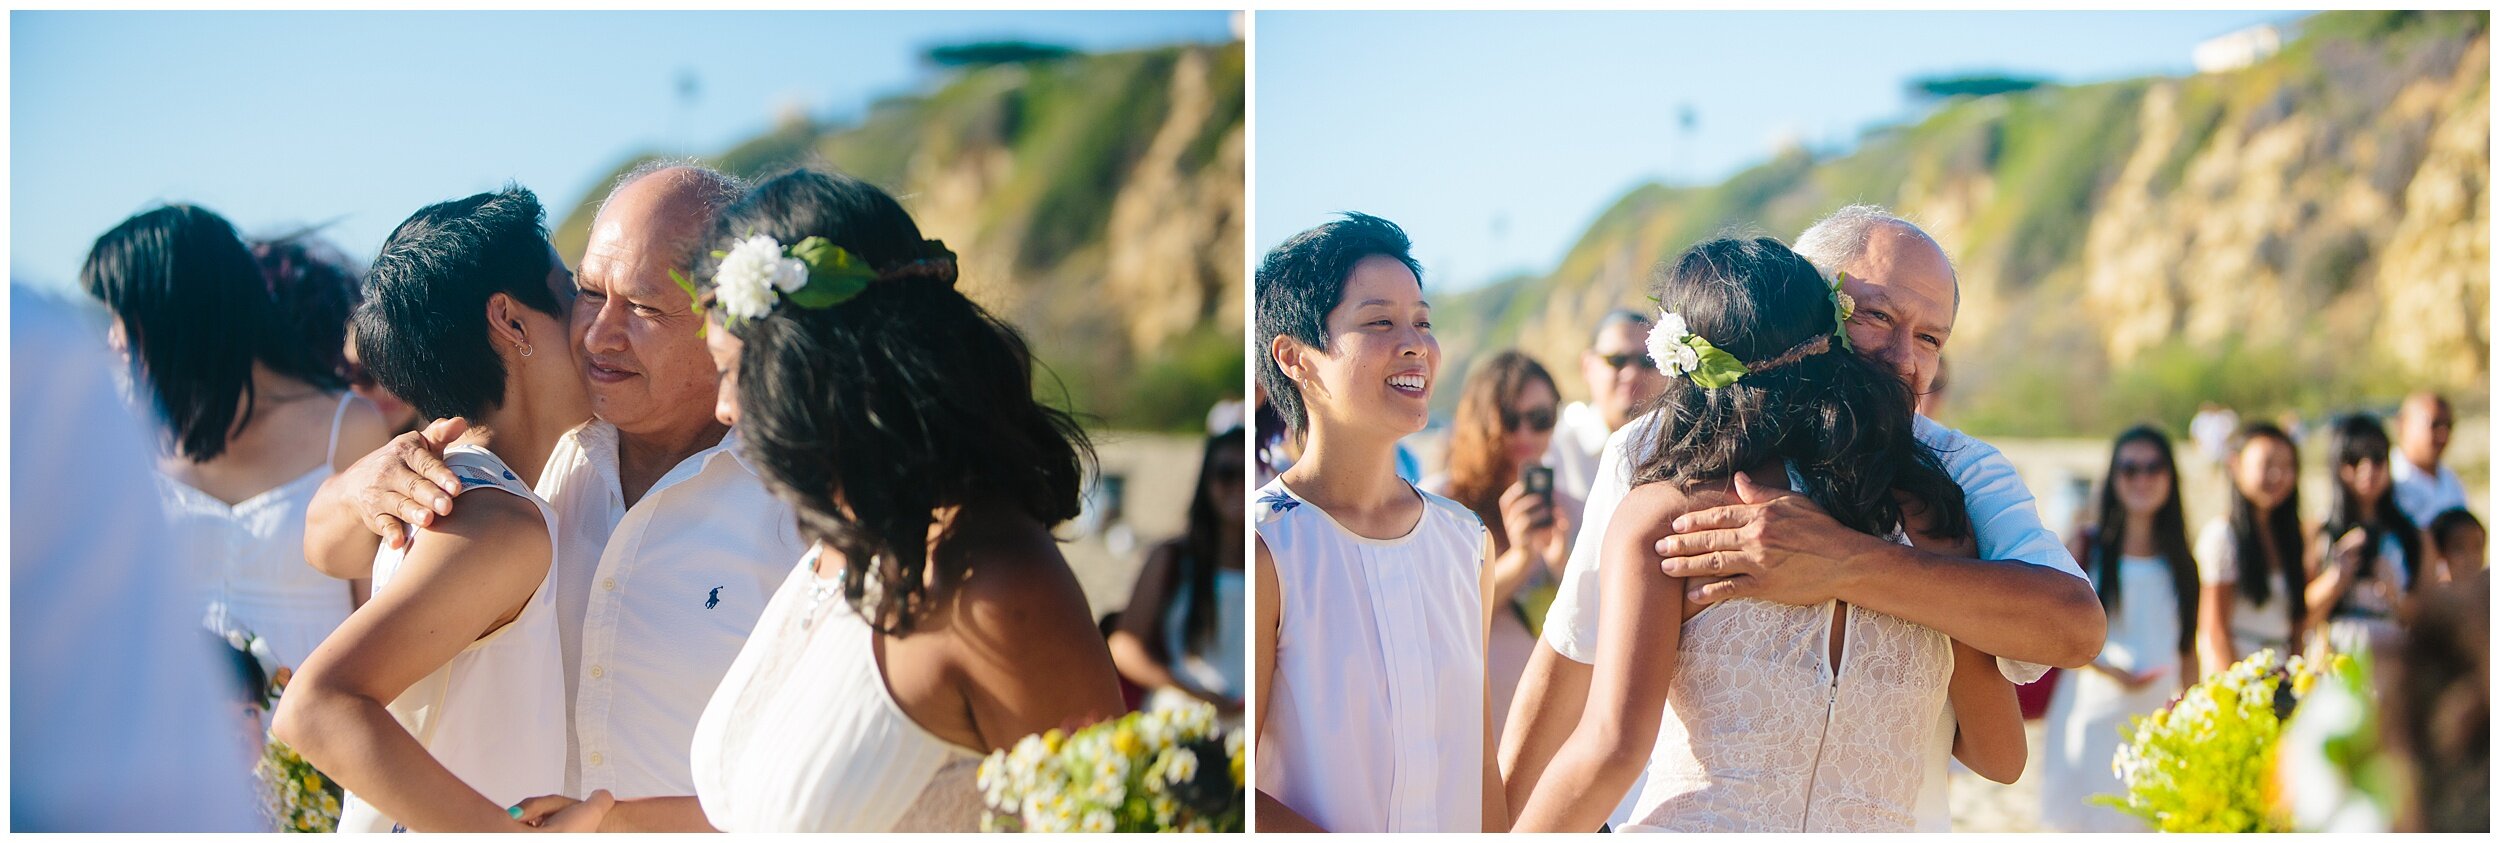 Adventure Wedding Photographer Santa Monica Beach_0114.jpg